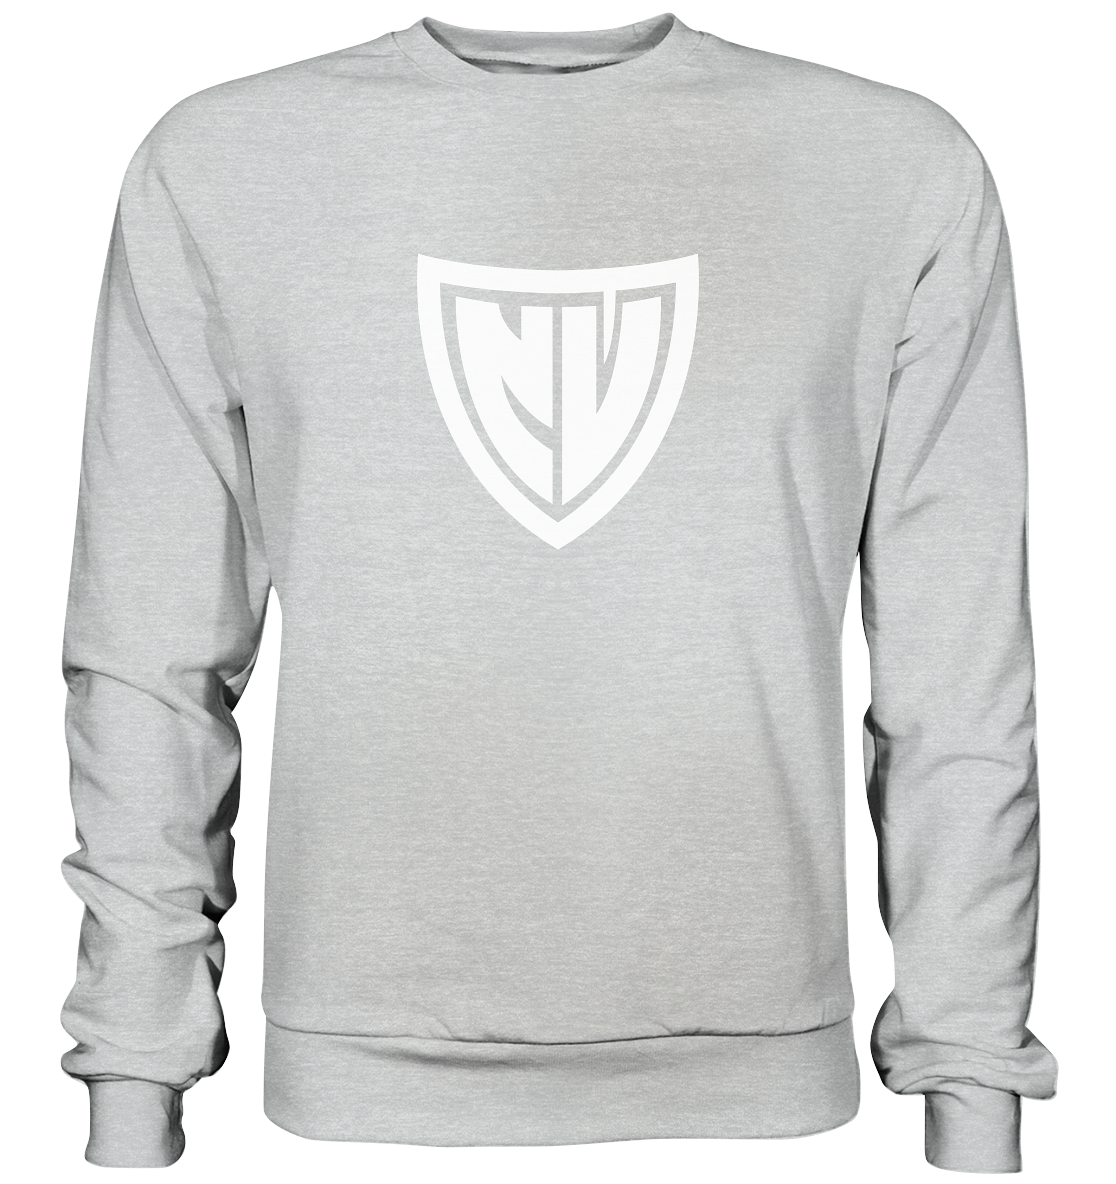 NEW VISION ESPORTS - Basic Sweatshirt